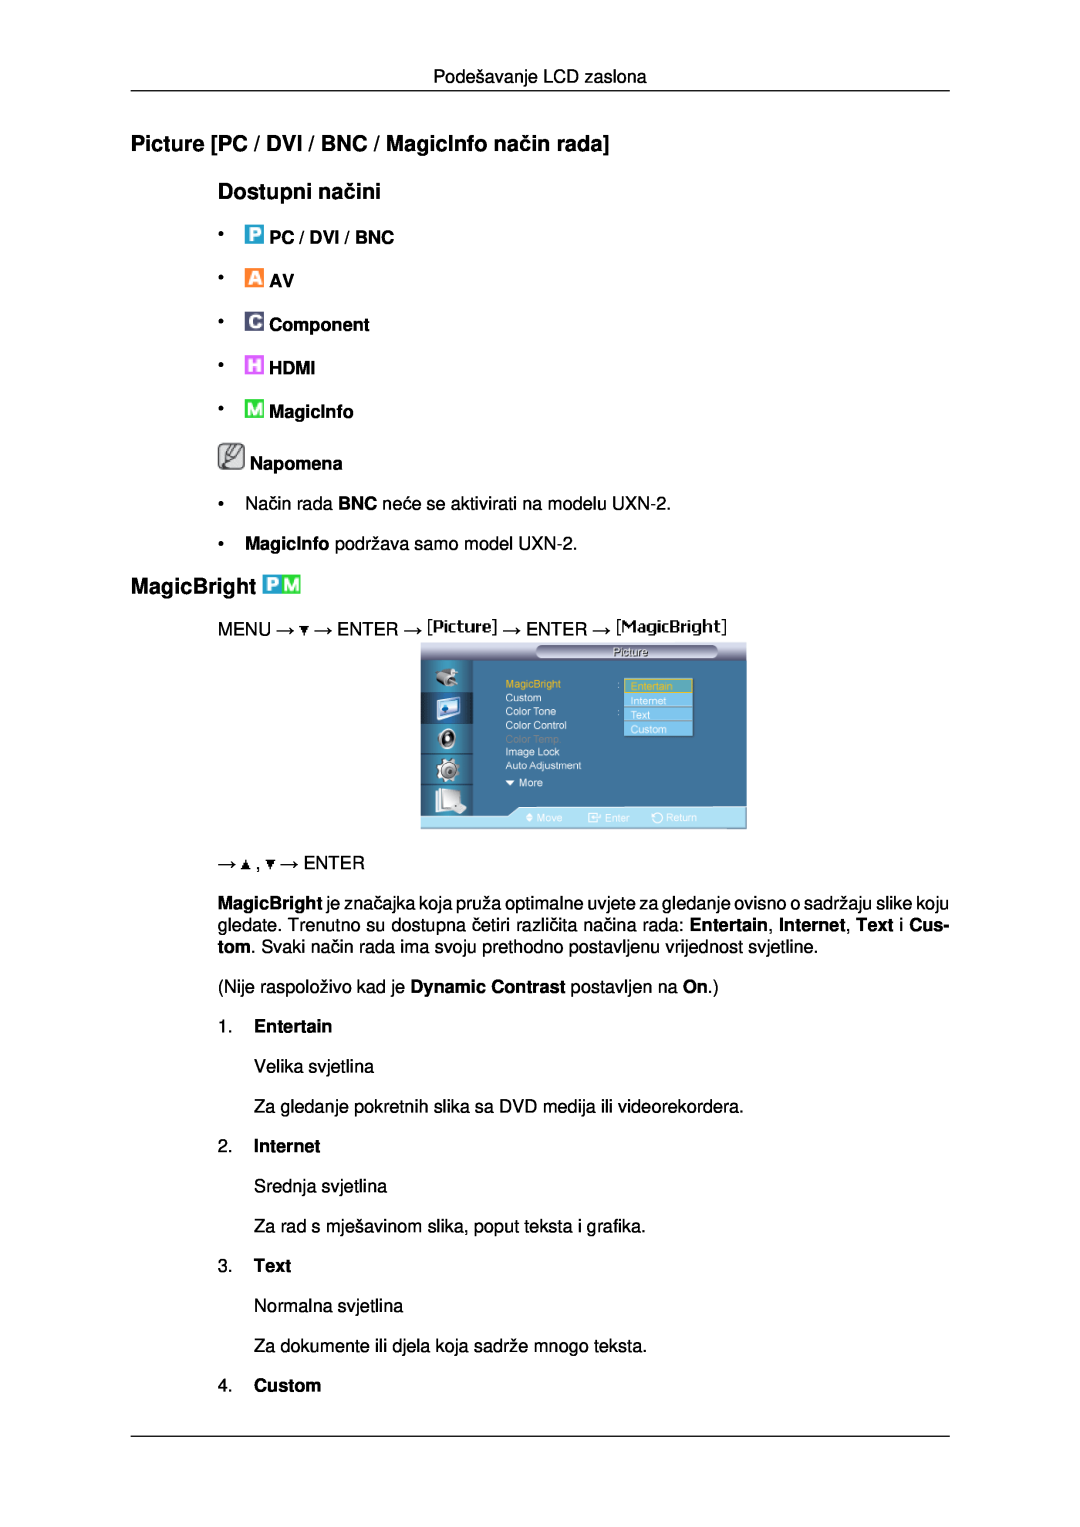 Samsung LH40MRTLBC/EN manual Picture PC / DVI / BNC / MagicInfo način rada Dostupni načini, MagicBright, Text, Custom 